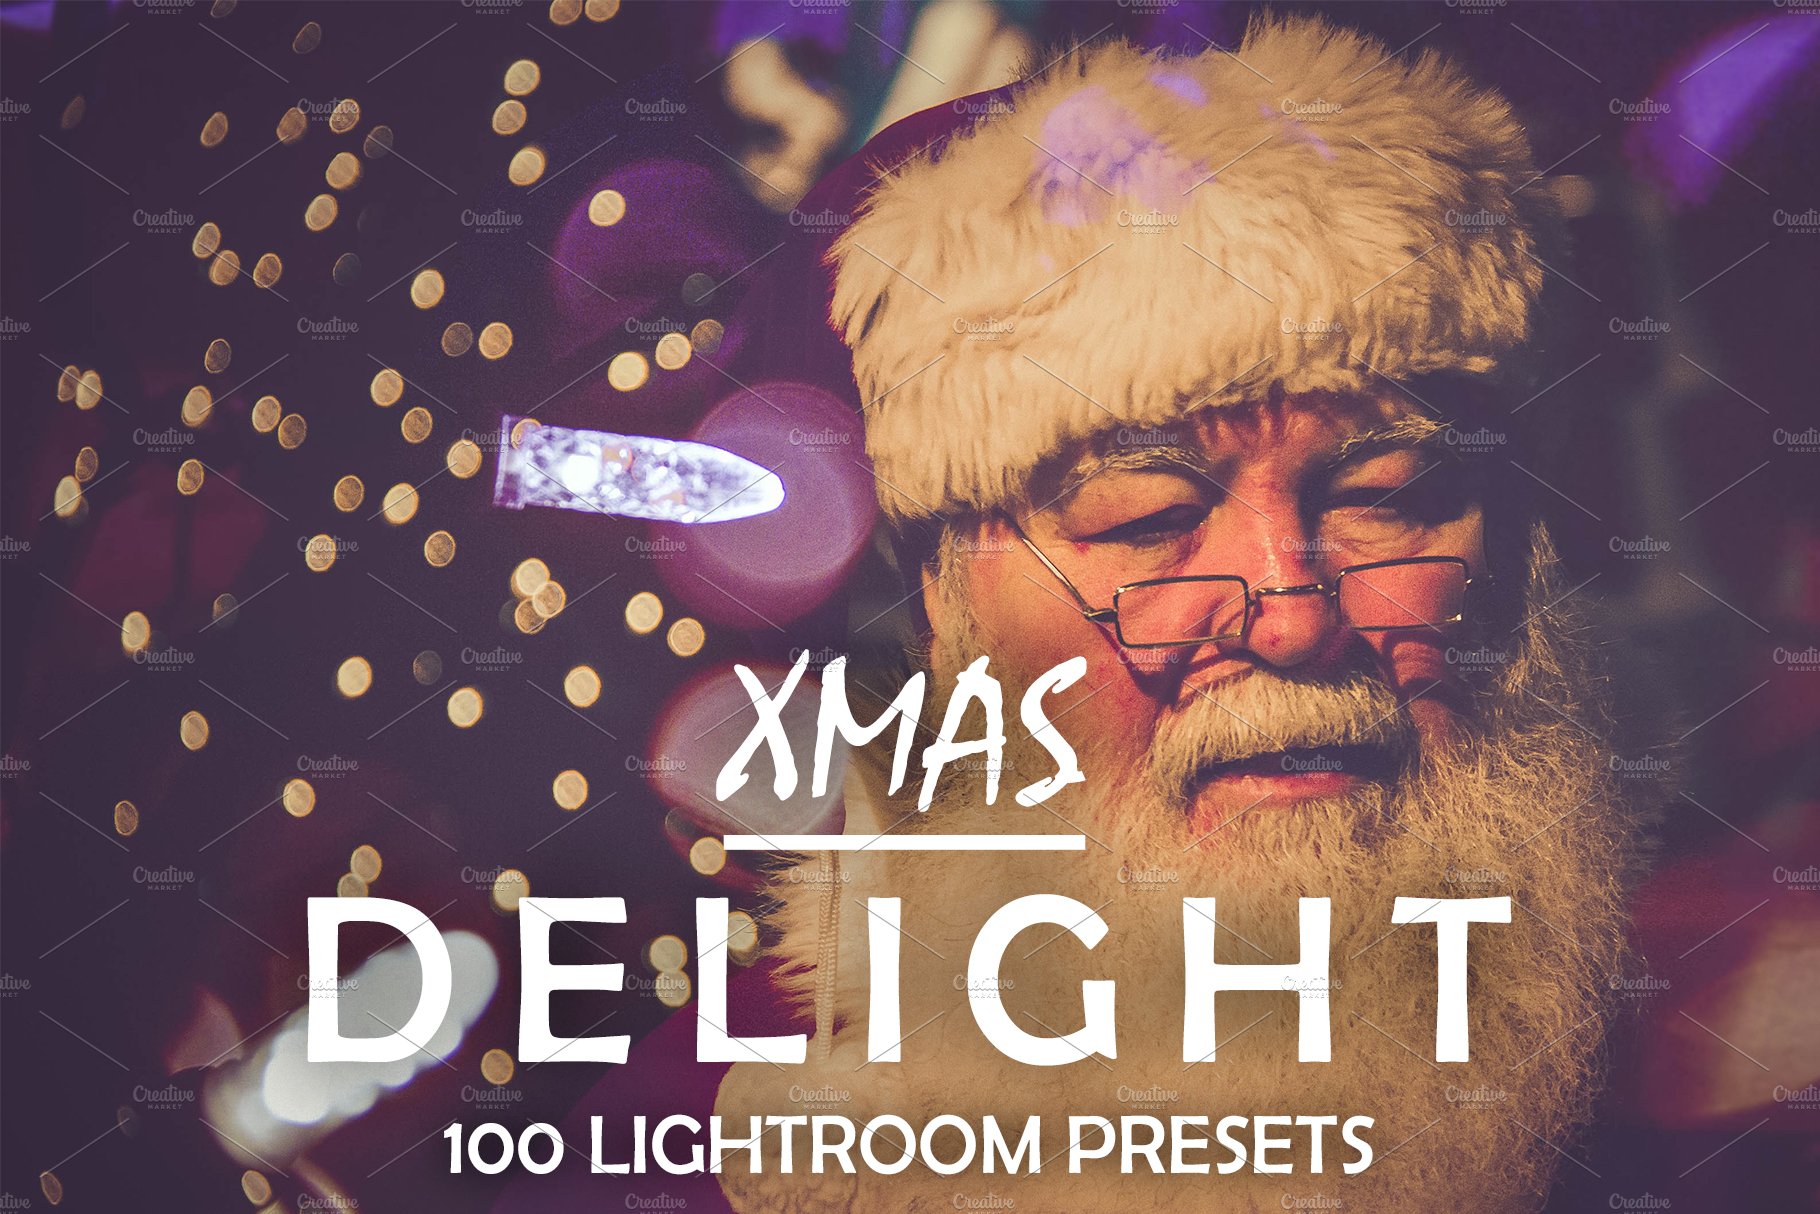 XmasDelight - 100 Lightroom Presetscover image.